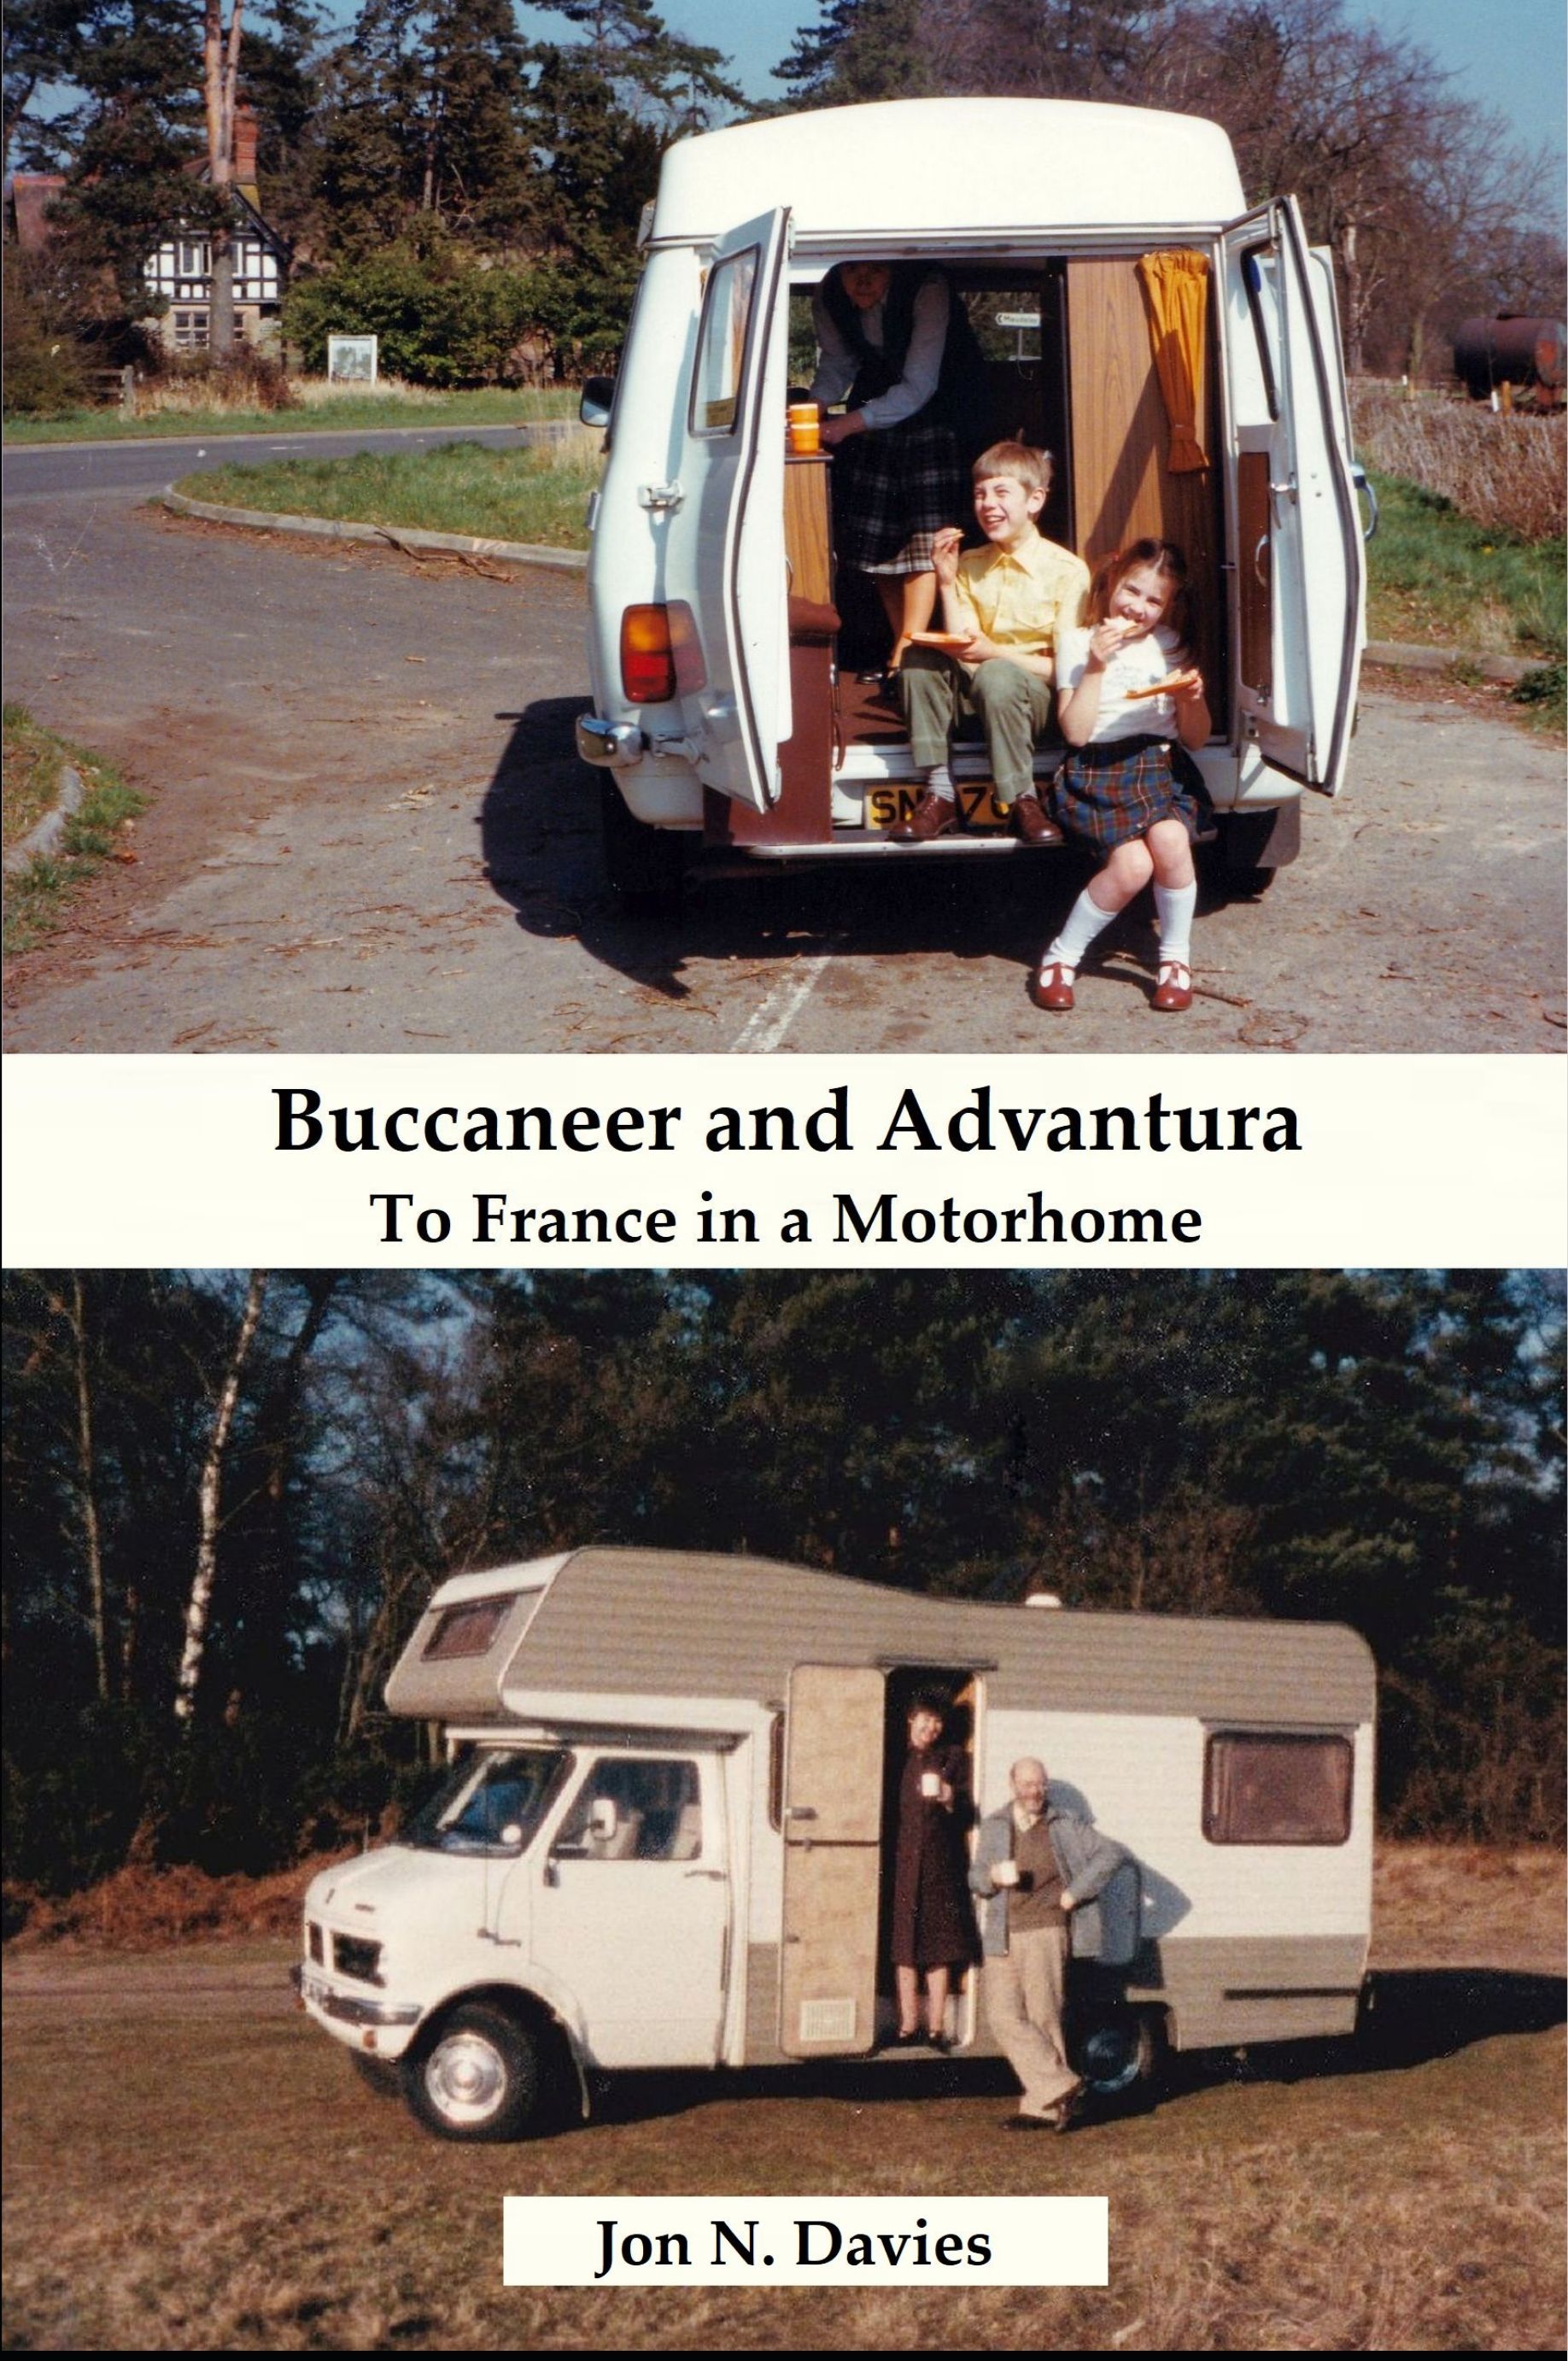 Buccaneer and Advantura by Jon N. Davies